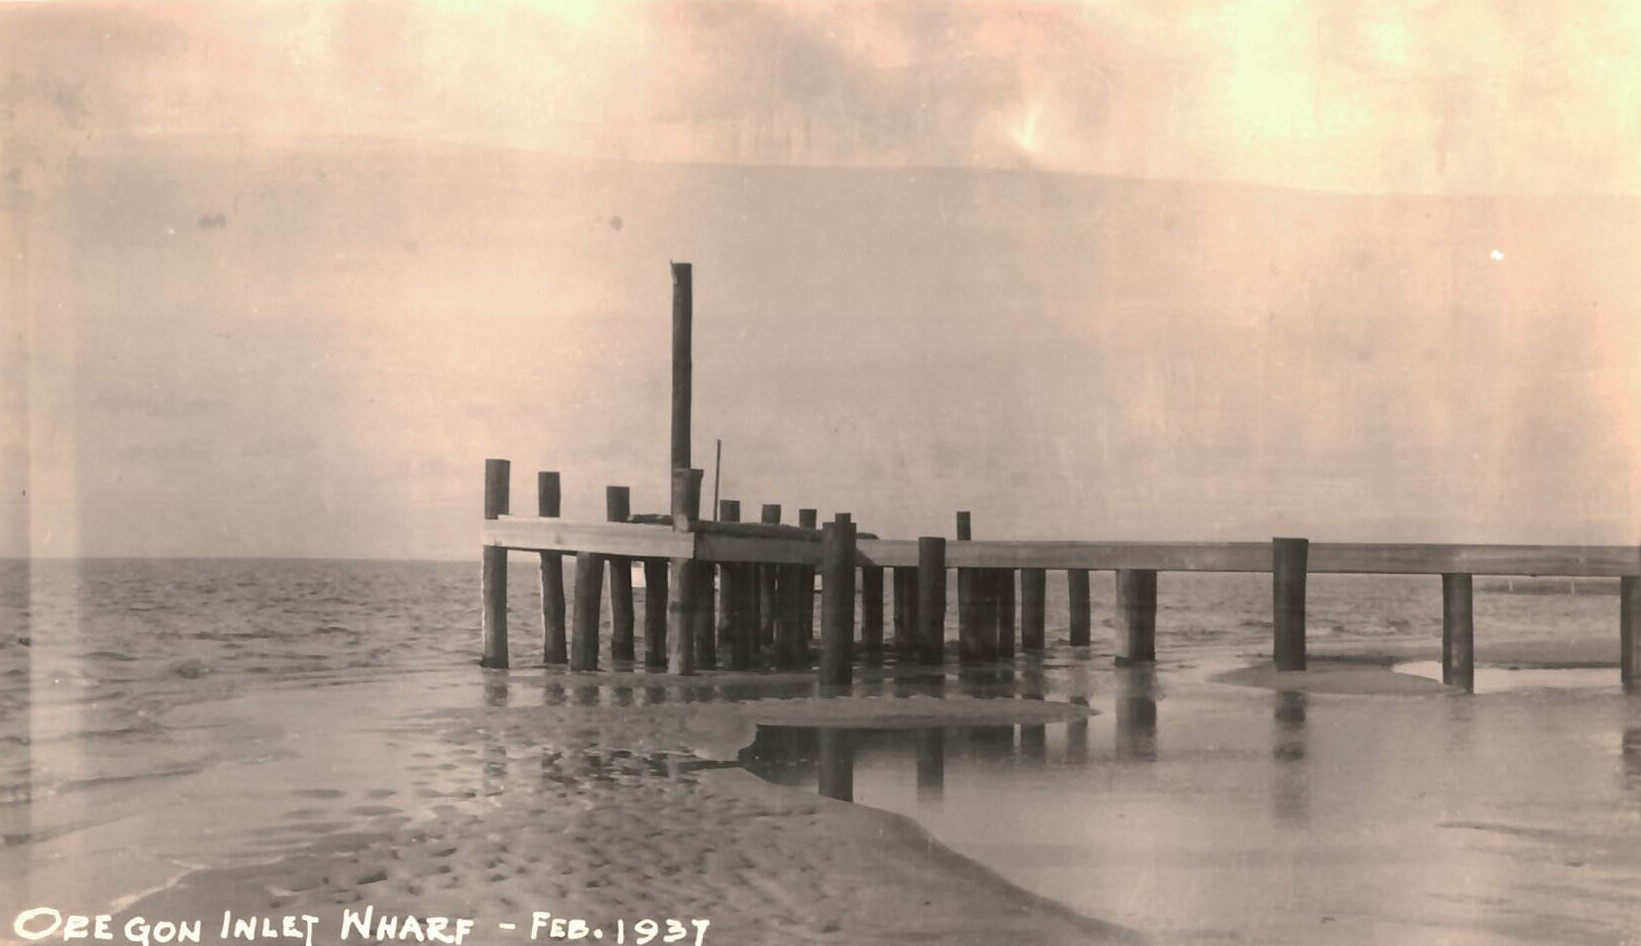 Oregon Inlet wharf, photo taken in February 1937.